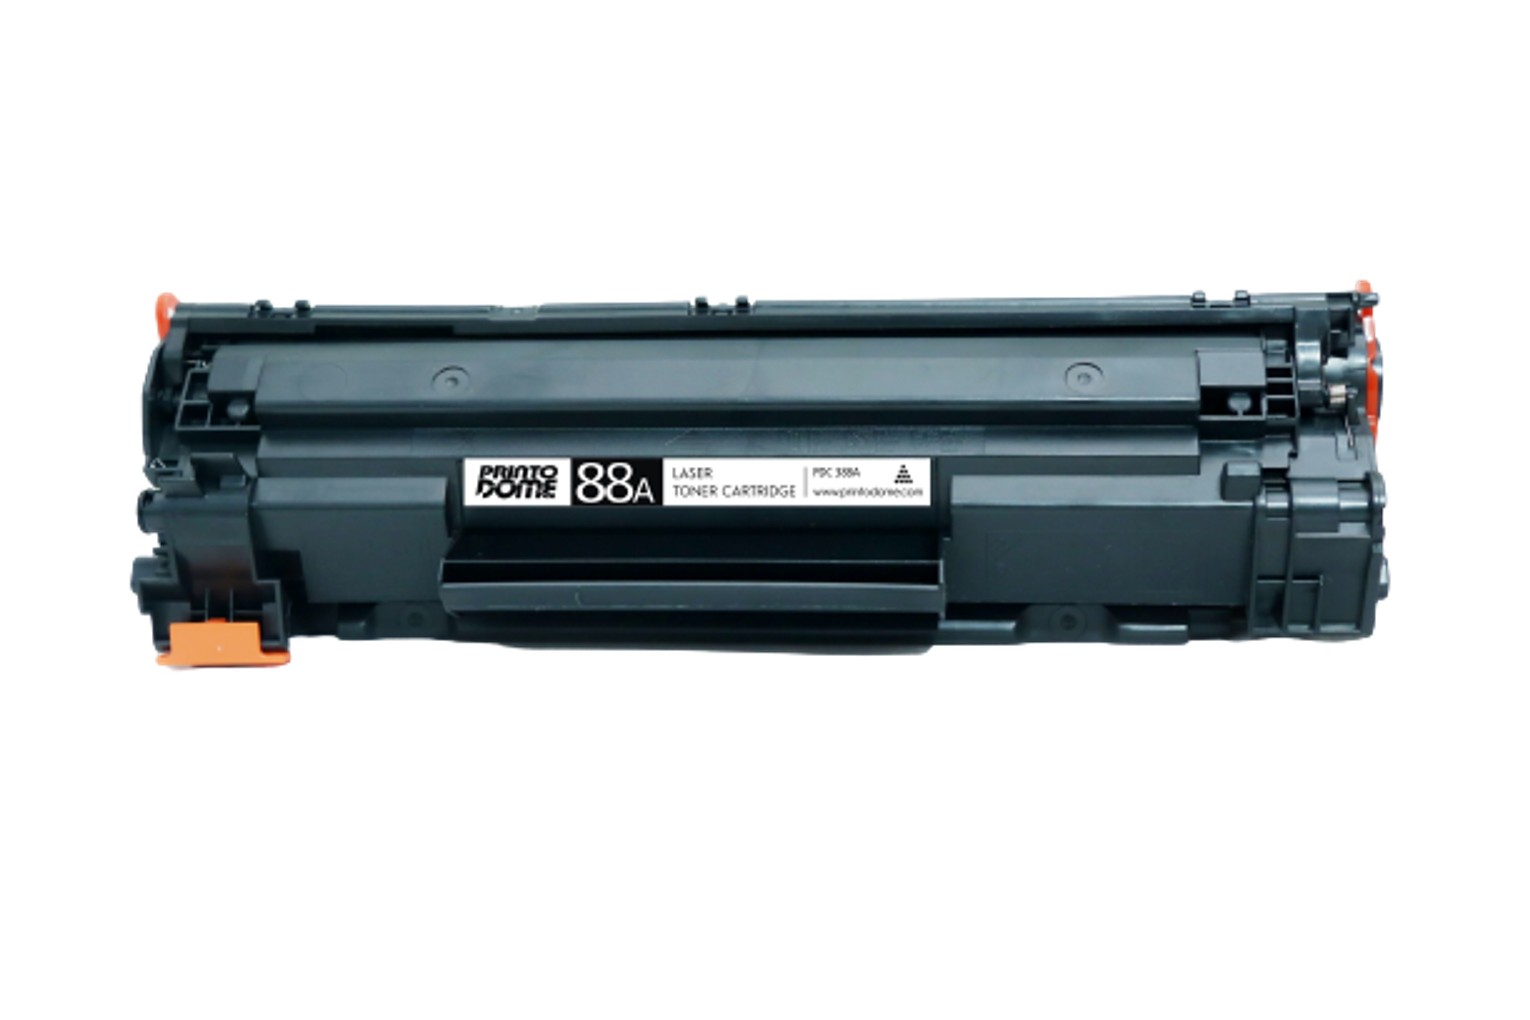 PRINTODOME Black Laser Toner HP 388A Compatible Ink Cartridge_0